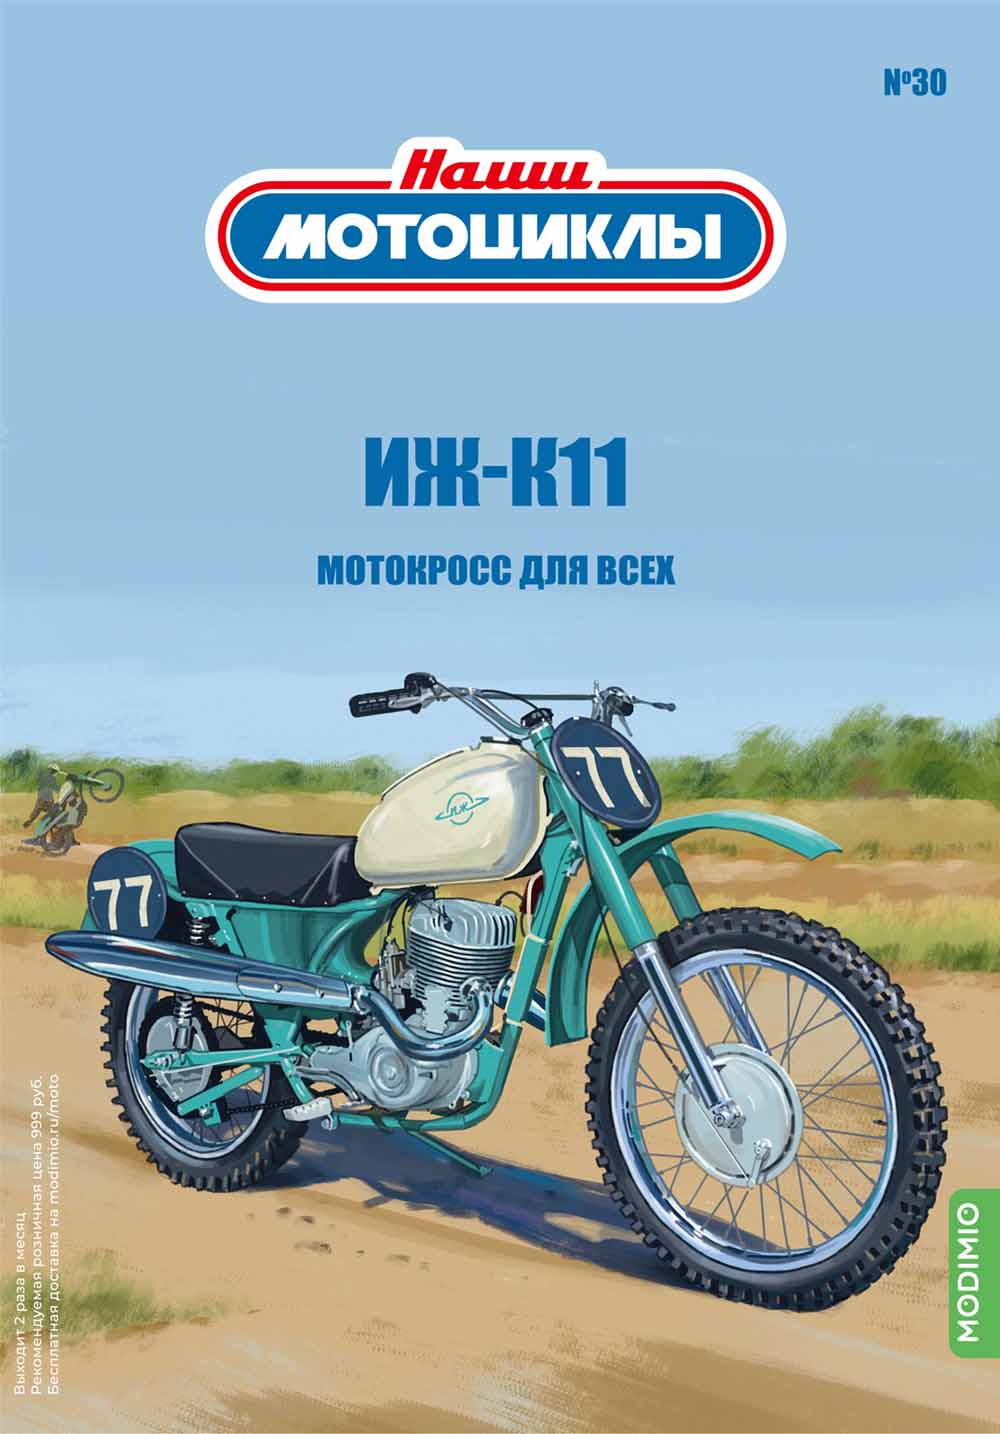 Наши мотоциклы №30, ИЖ-К11